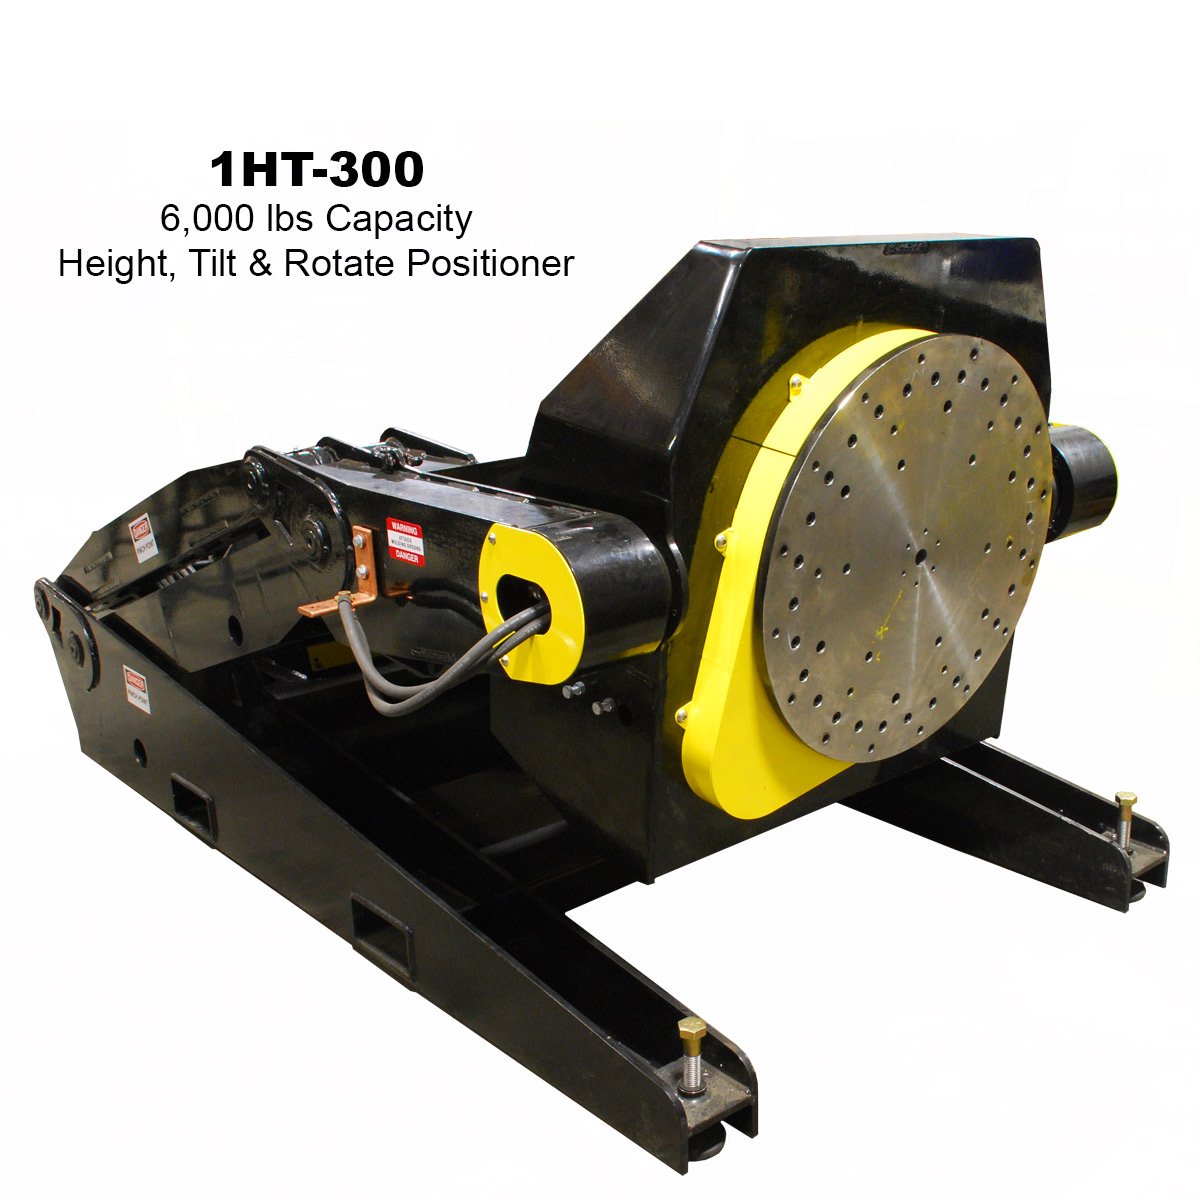 02-6000lb-Height-Tilt-Rotate-Positioner